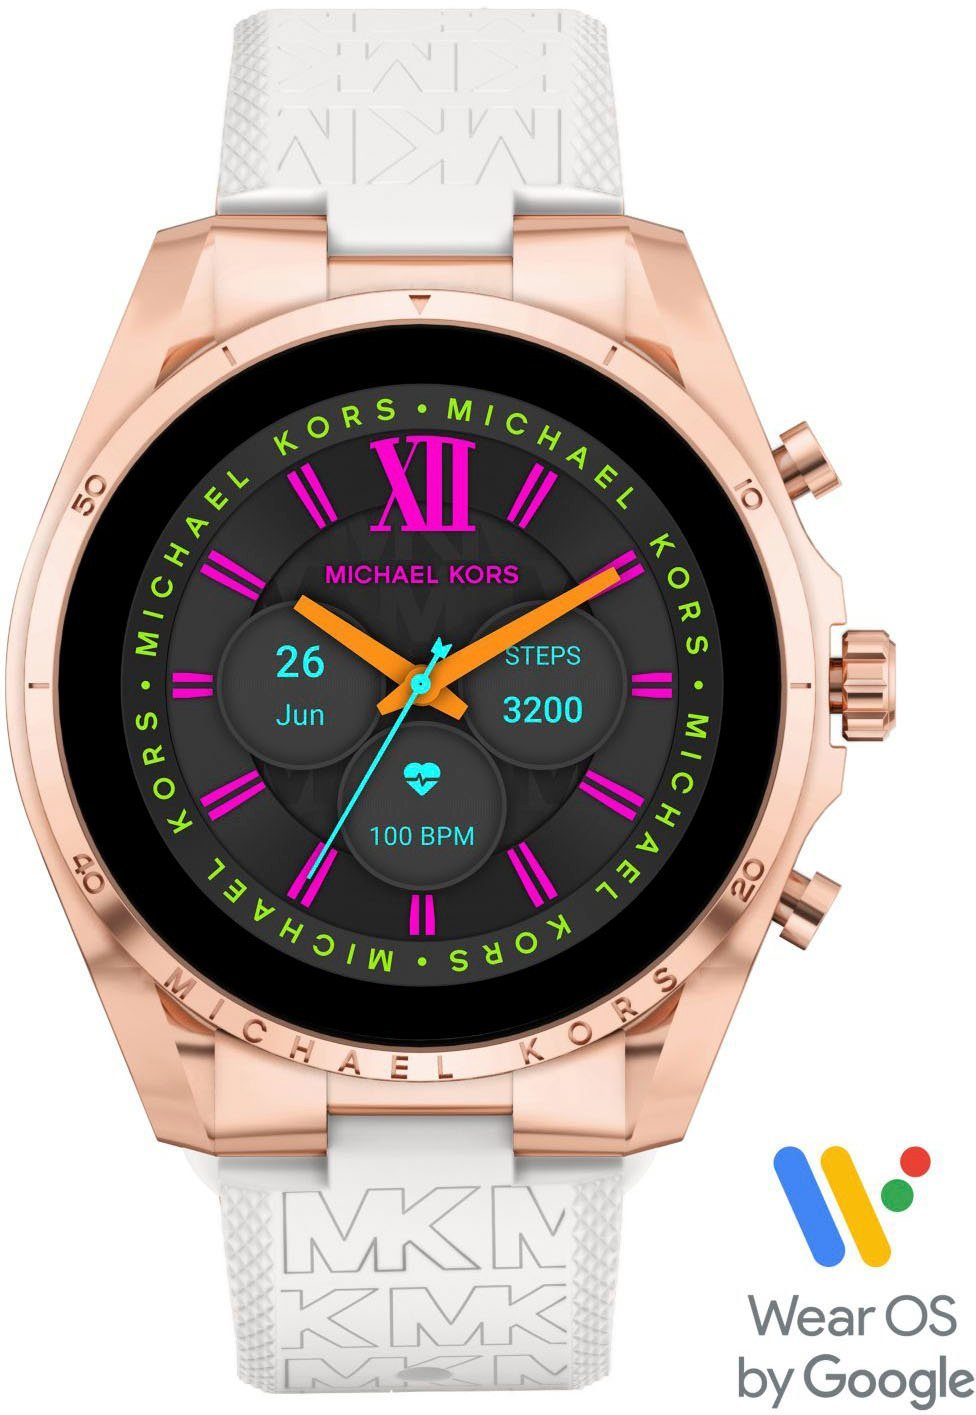 BRADSHAW, MKT5153 KORS by Google) 6 Smartwatch ACCESS (Wear GEN OS MICHAEL